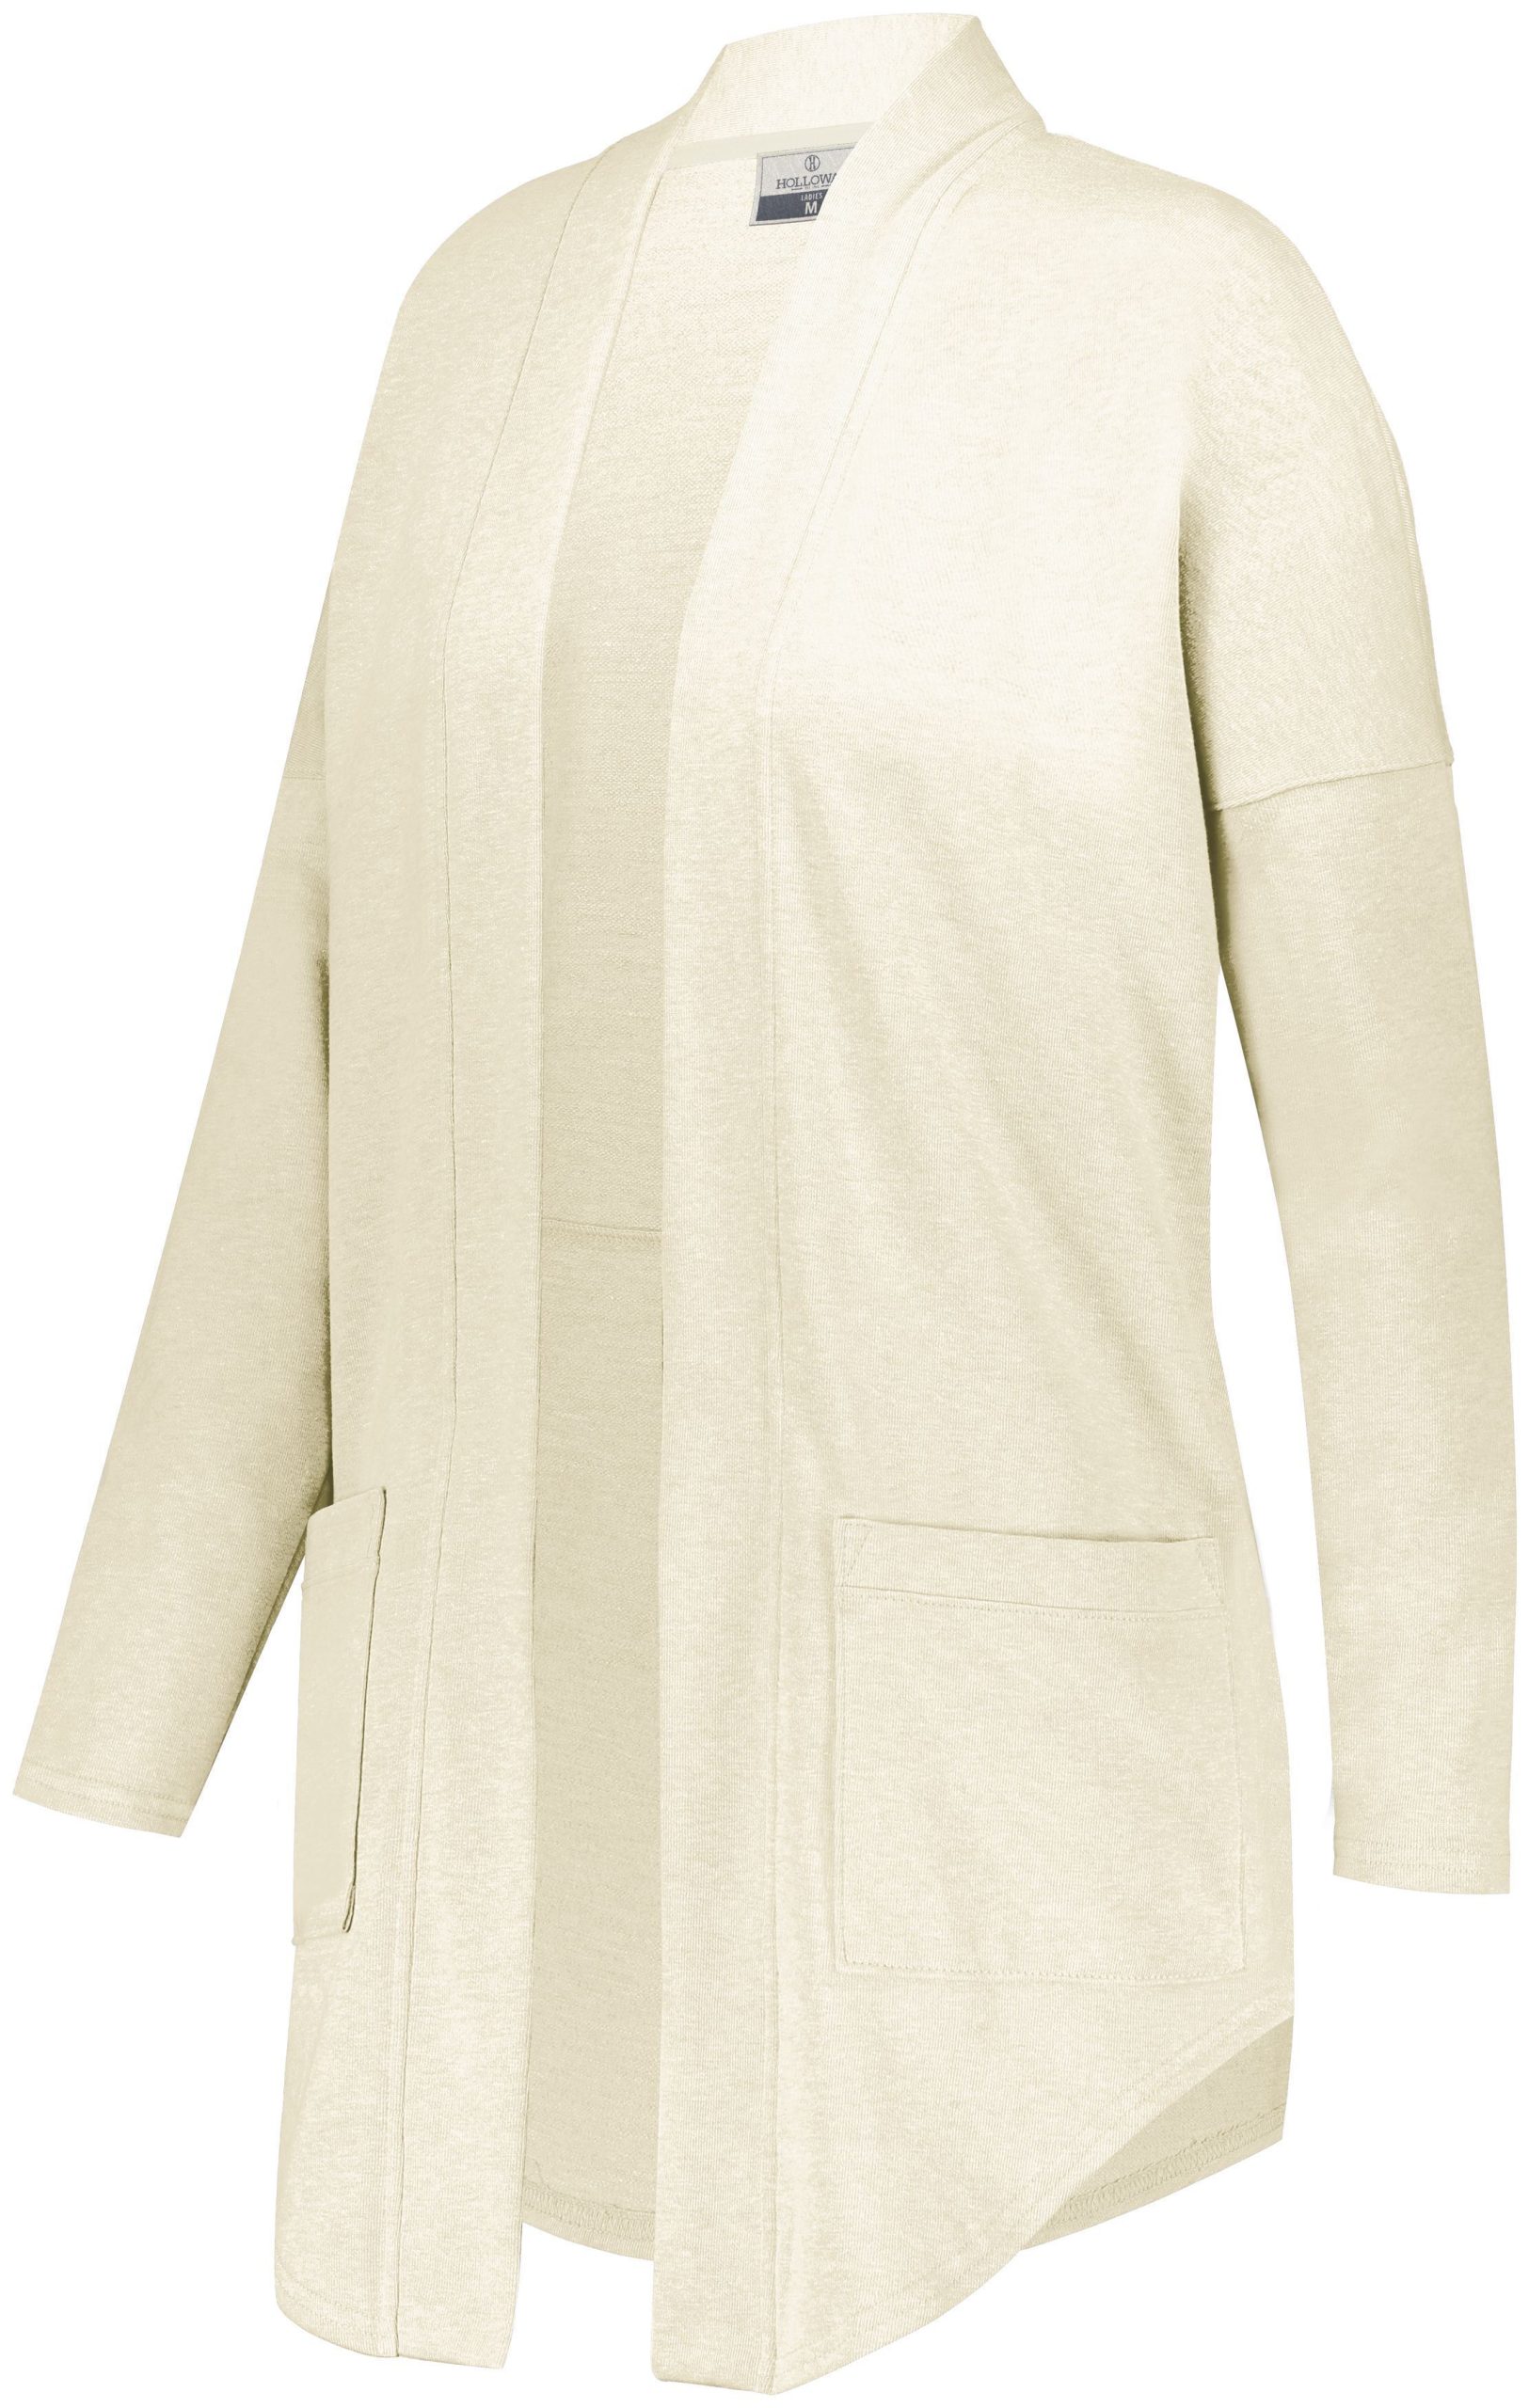 Ladies Athletic Sweater, Long Sleeve Sophomore Cardigan Top - Outerwear 37